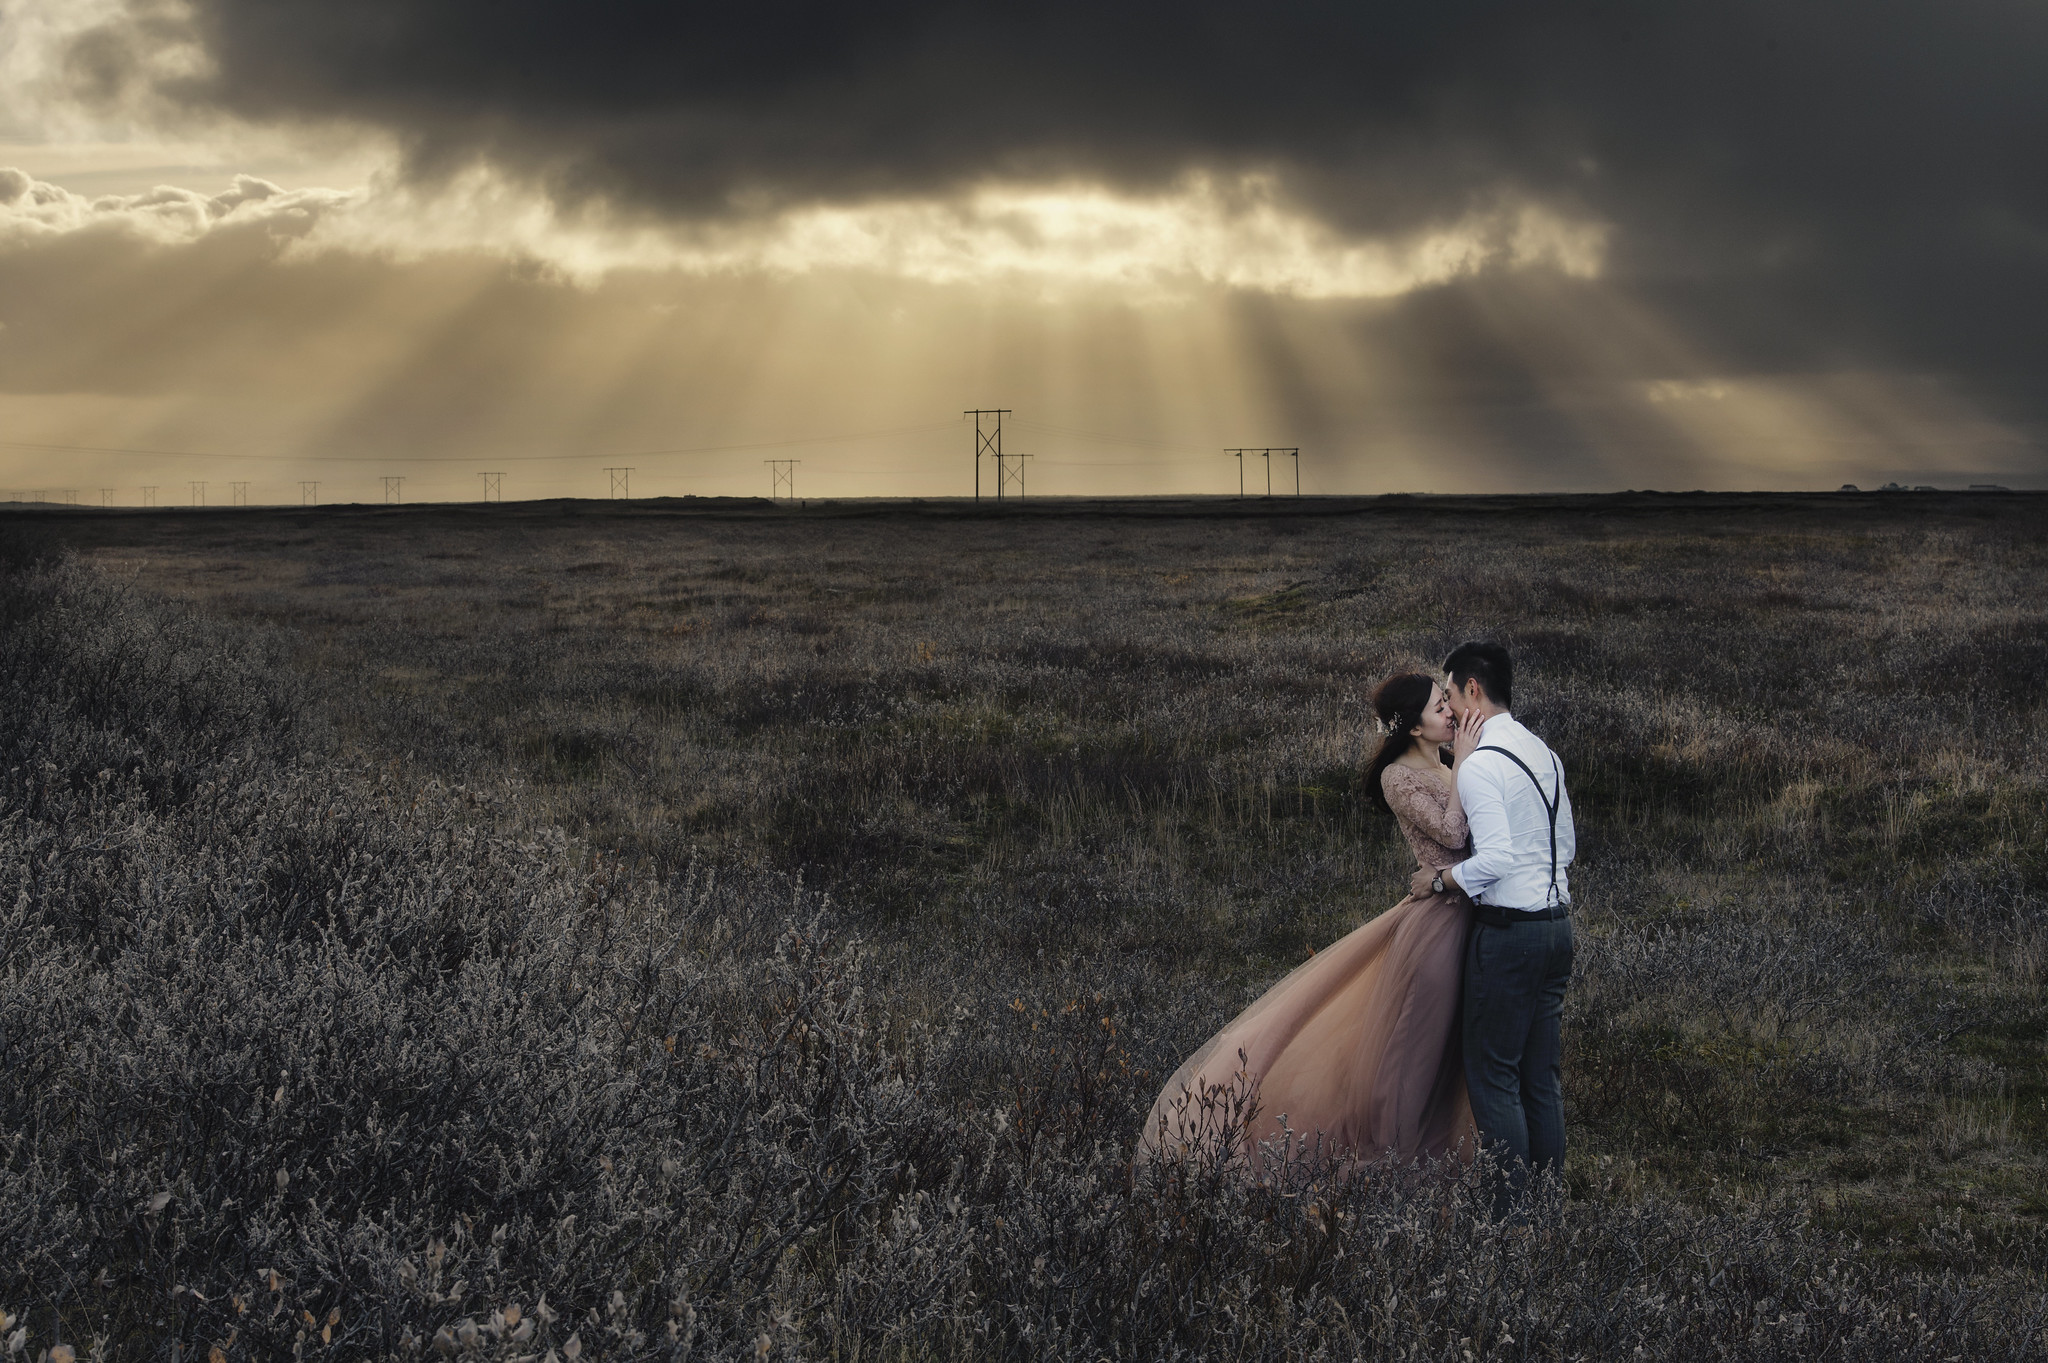 冰島婚紗, Iceland Pre-Wedding, 耶穌光, Donfer Photography, 婚攝東法, Donfer 藝術婚紗, 最美光線